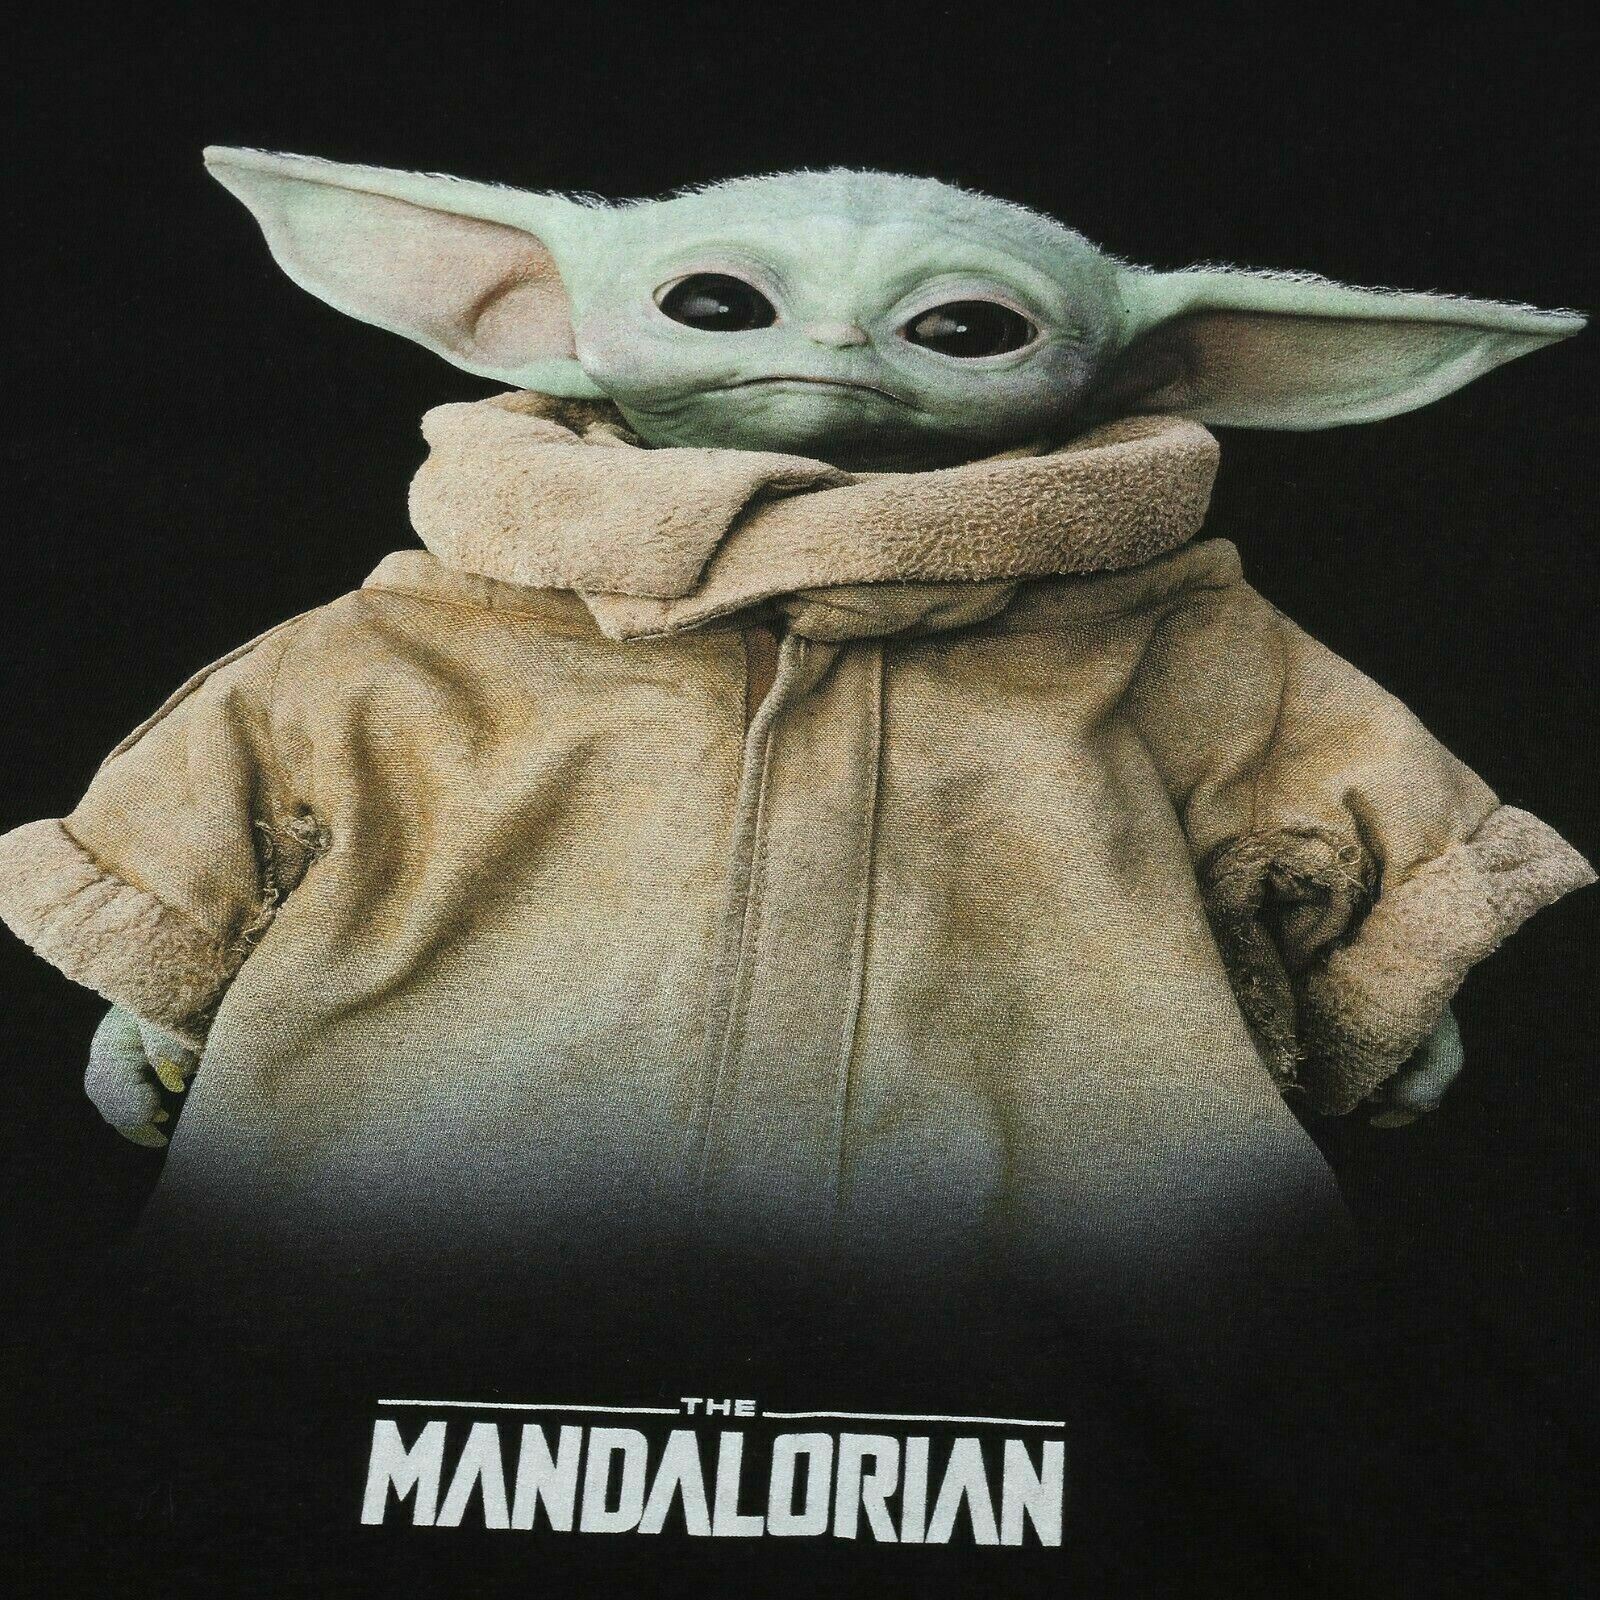 Official Star Wars Mens Mandalorian Baby Yoda T-shirt Black S-XXL | eBay